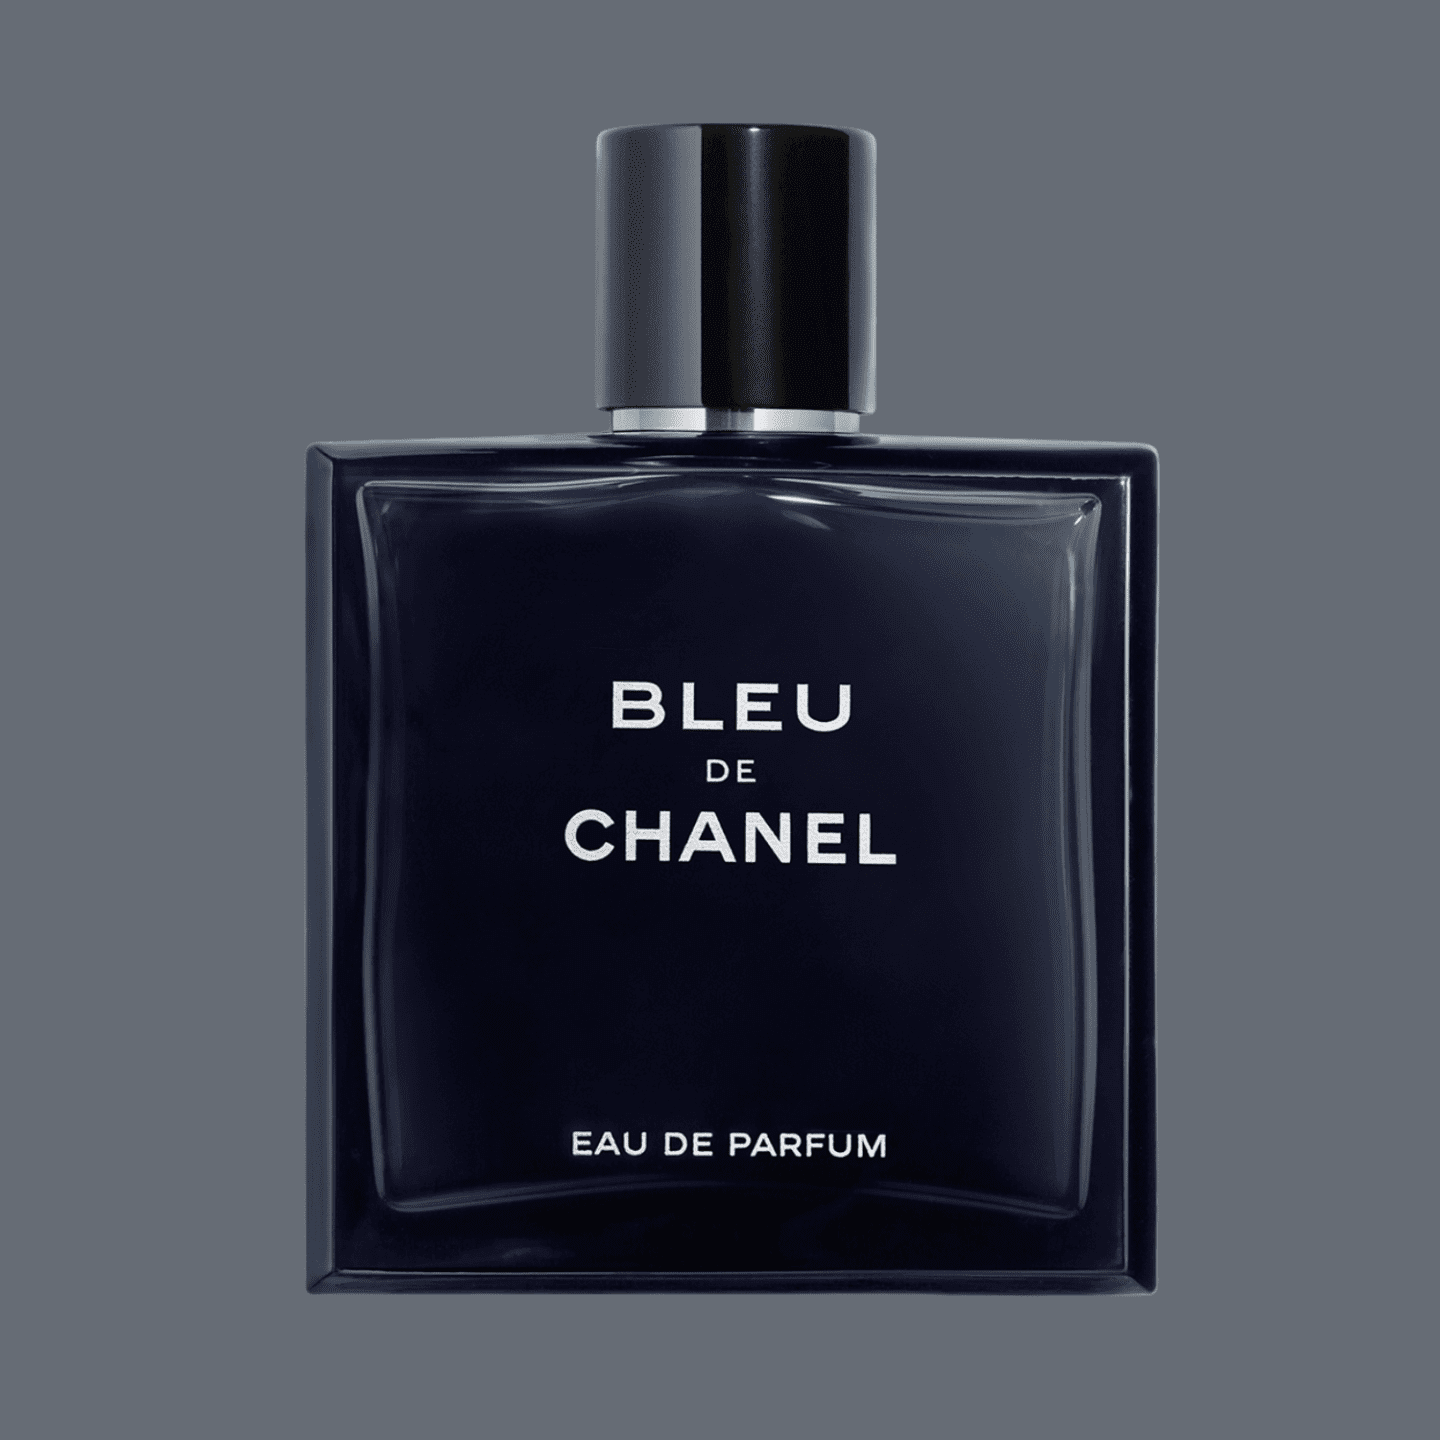 Bleu De Chanel
Best Chanel Fragrance For Men